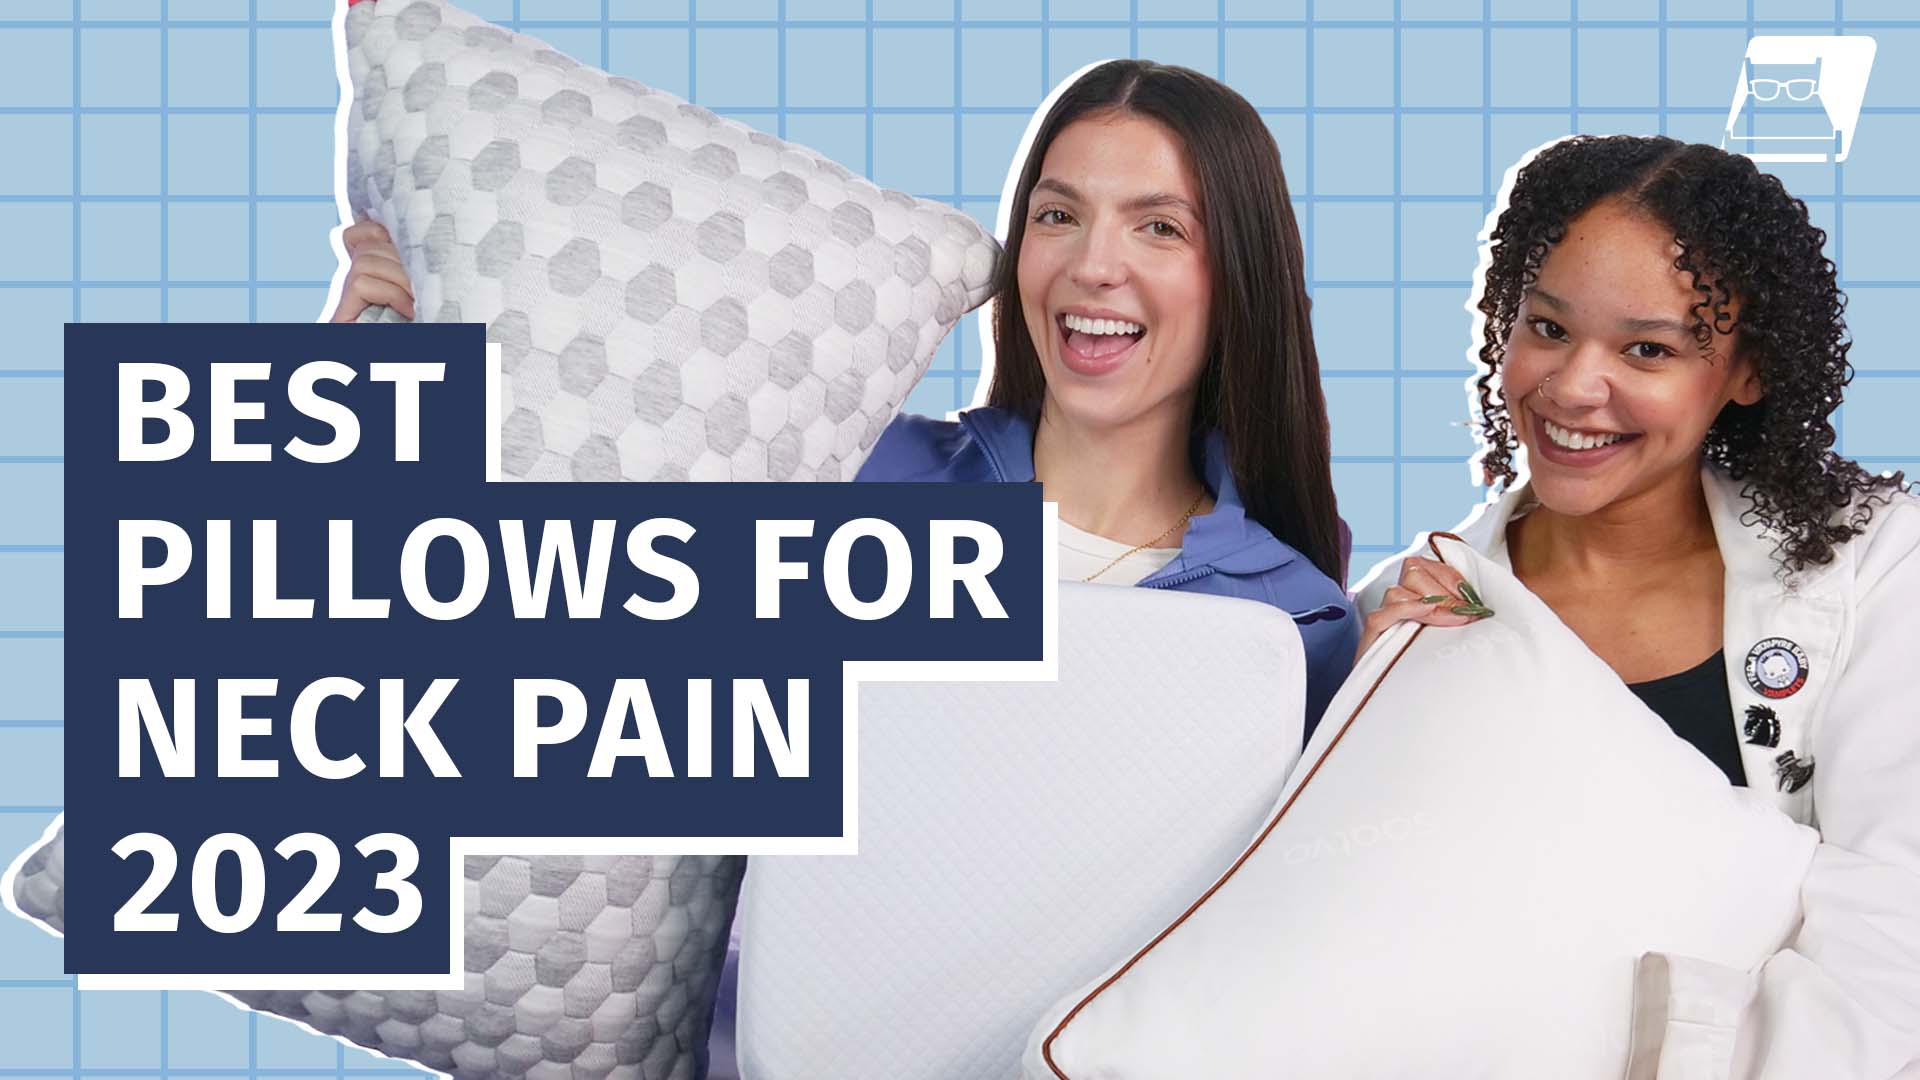 Xtra-Comfort Chiropractic Pillow - Neck Support Pain Relief